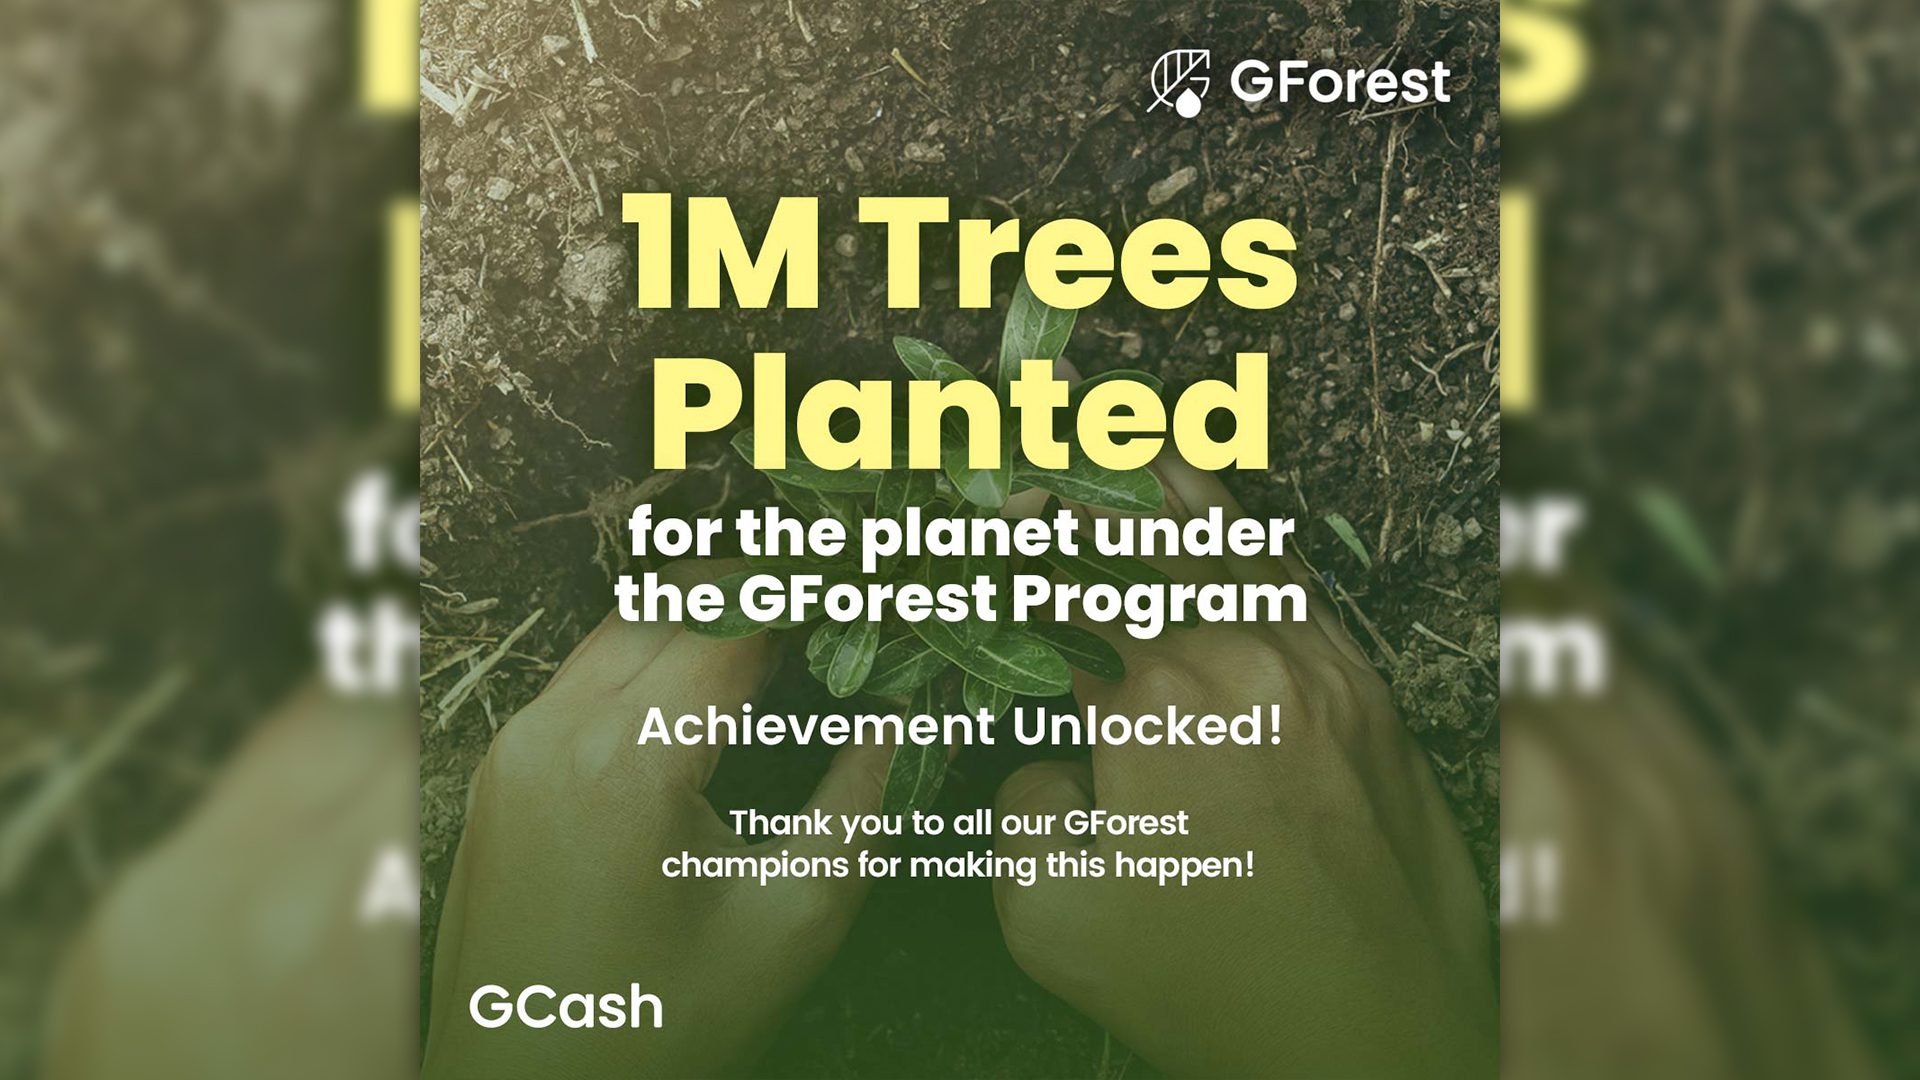 GCash’s GForest plants 1 million trees nationwide